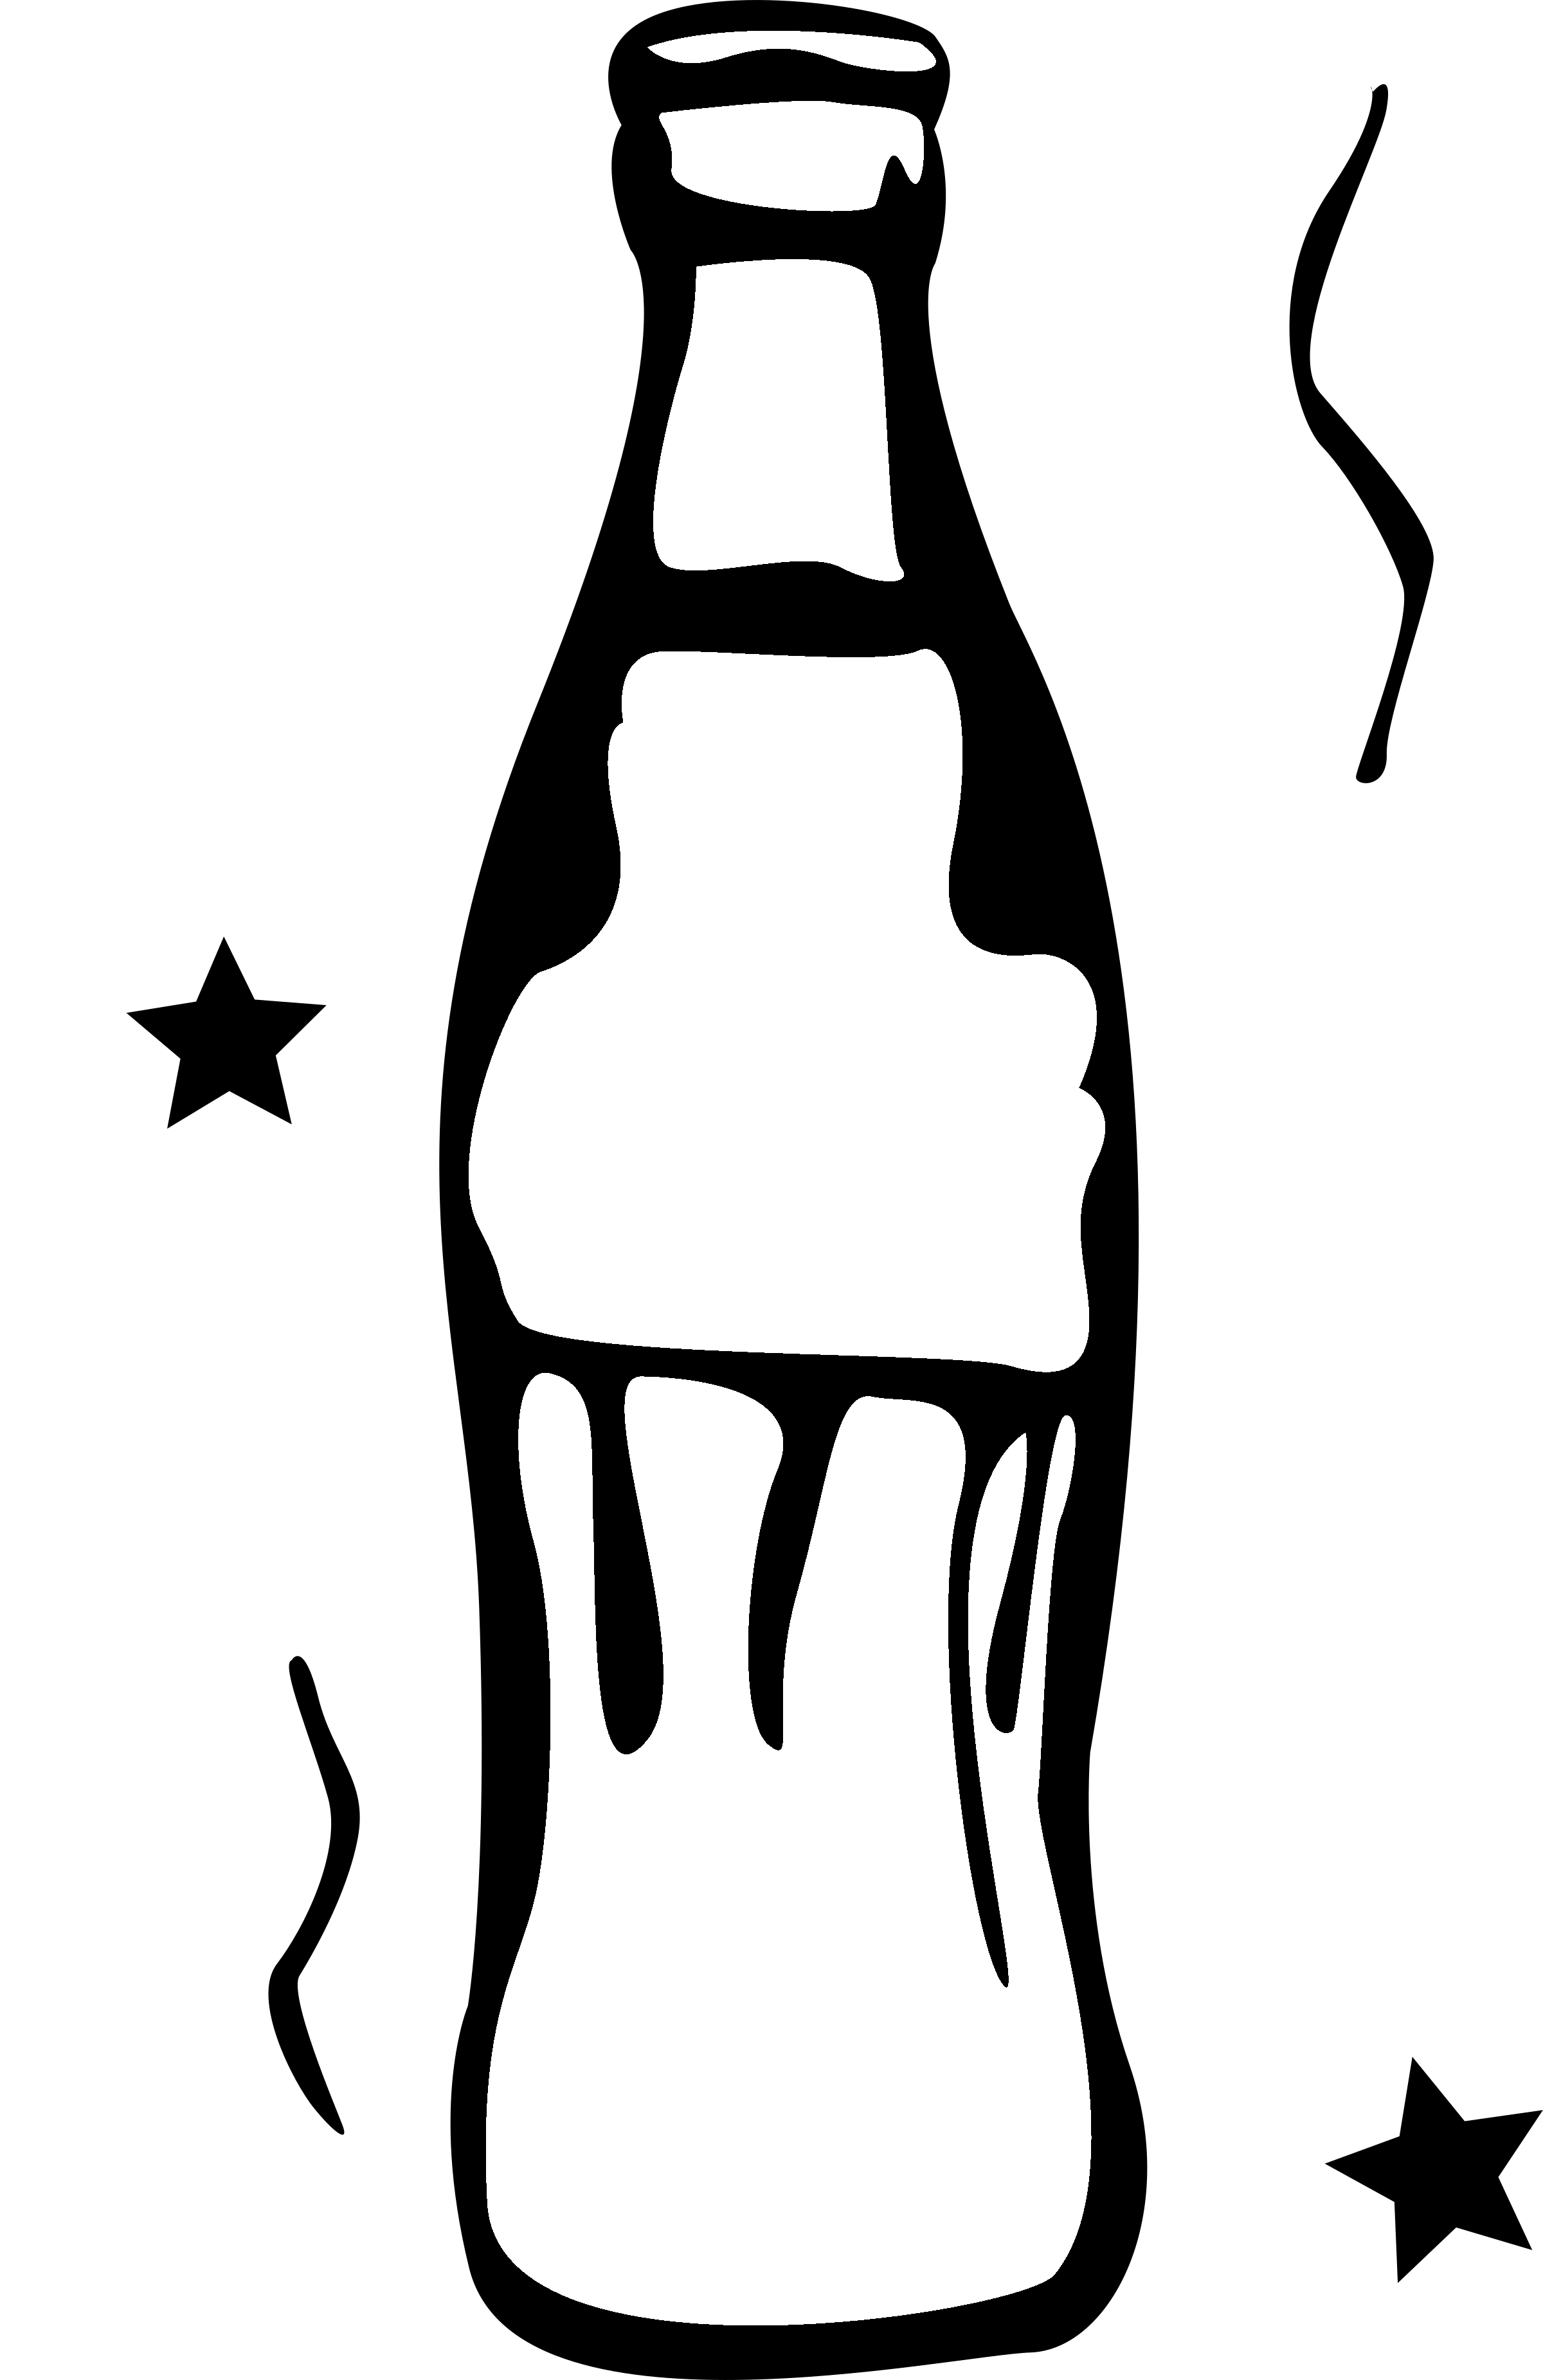 Coca Cola Bottle2 Logo Black And White - Ken's Ramen Pork Bun (2400x3701)